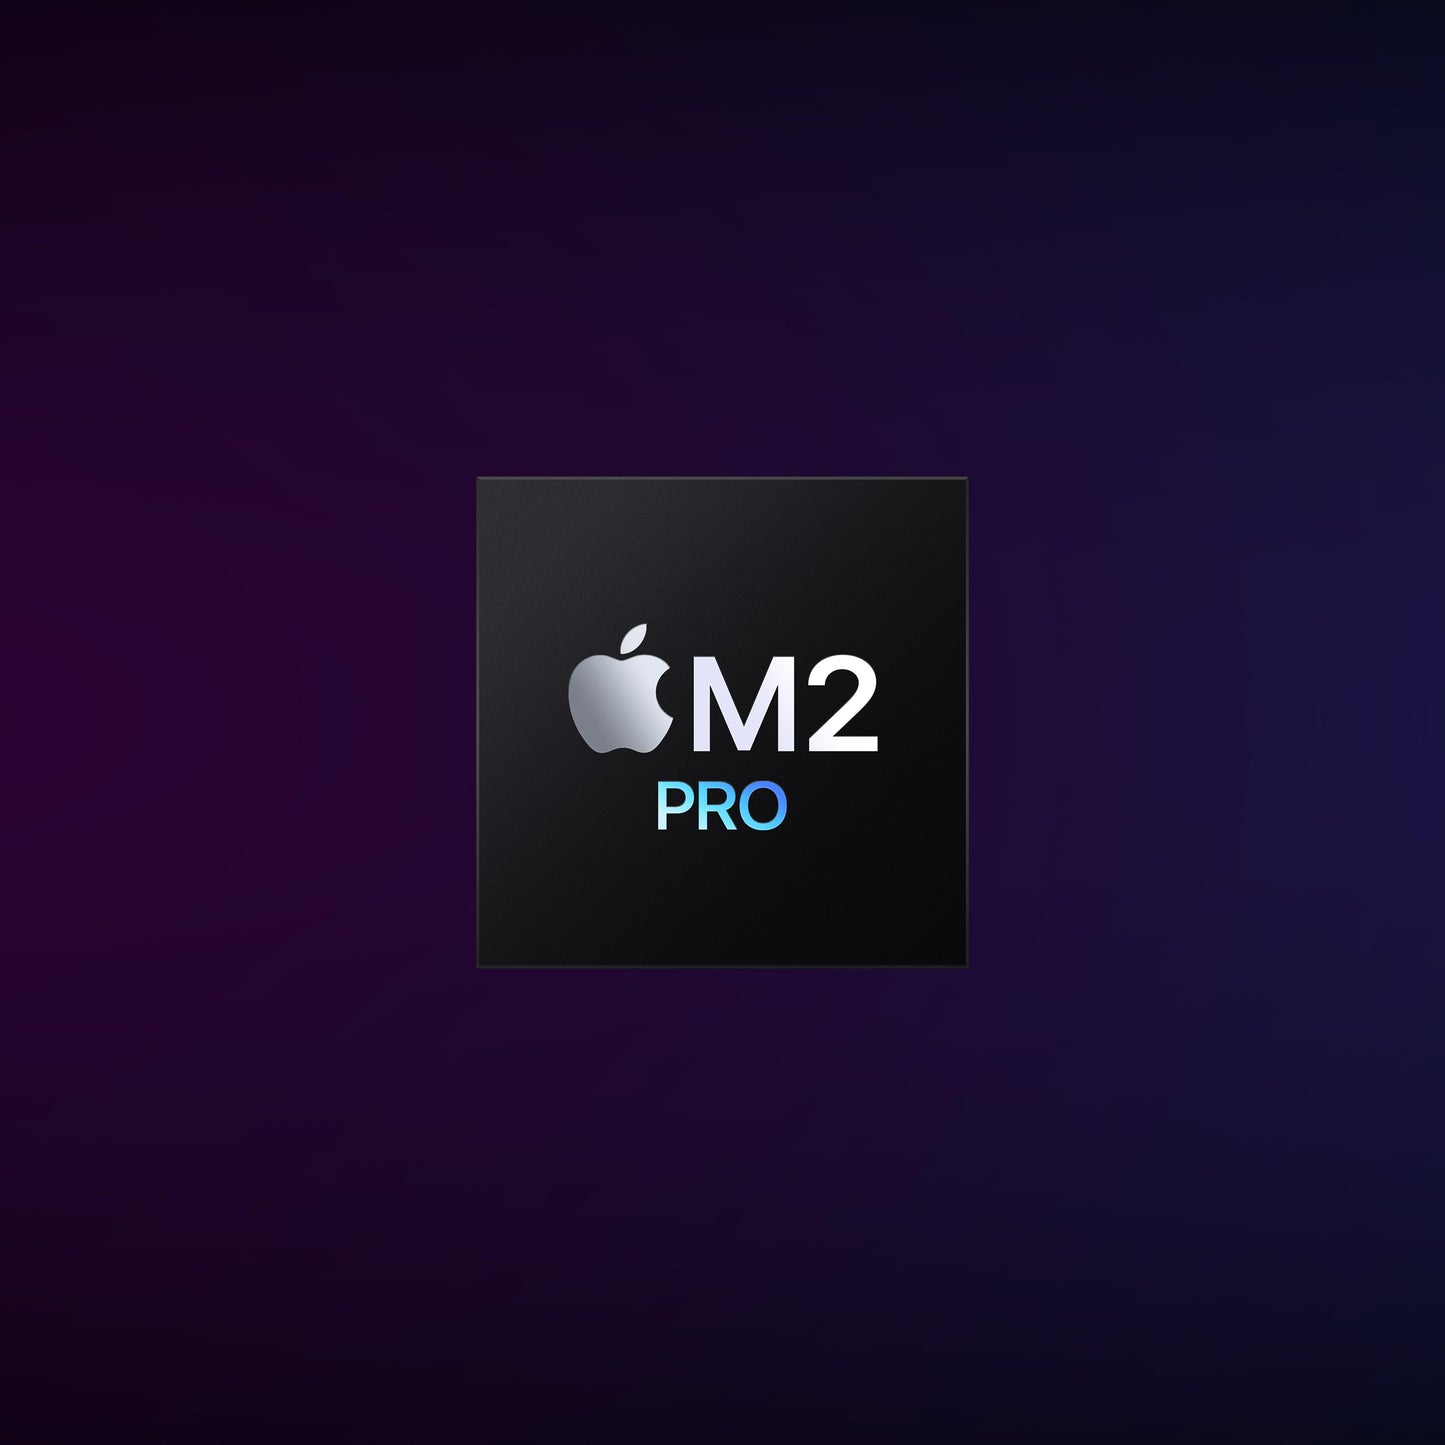 Mac mini: Apple M2 Pro chip with 10? core CPU and 16? core GPU, 512GB SSD - Silver